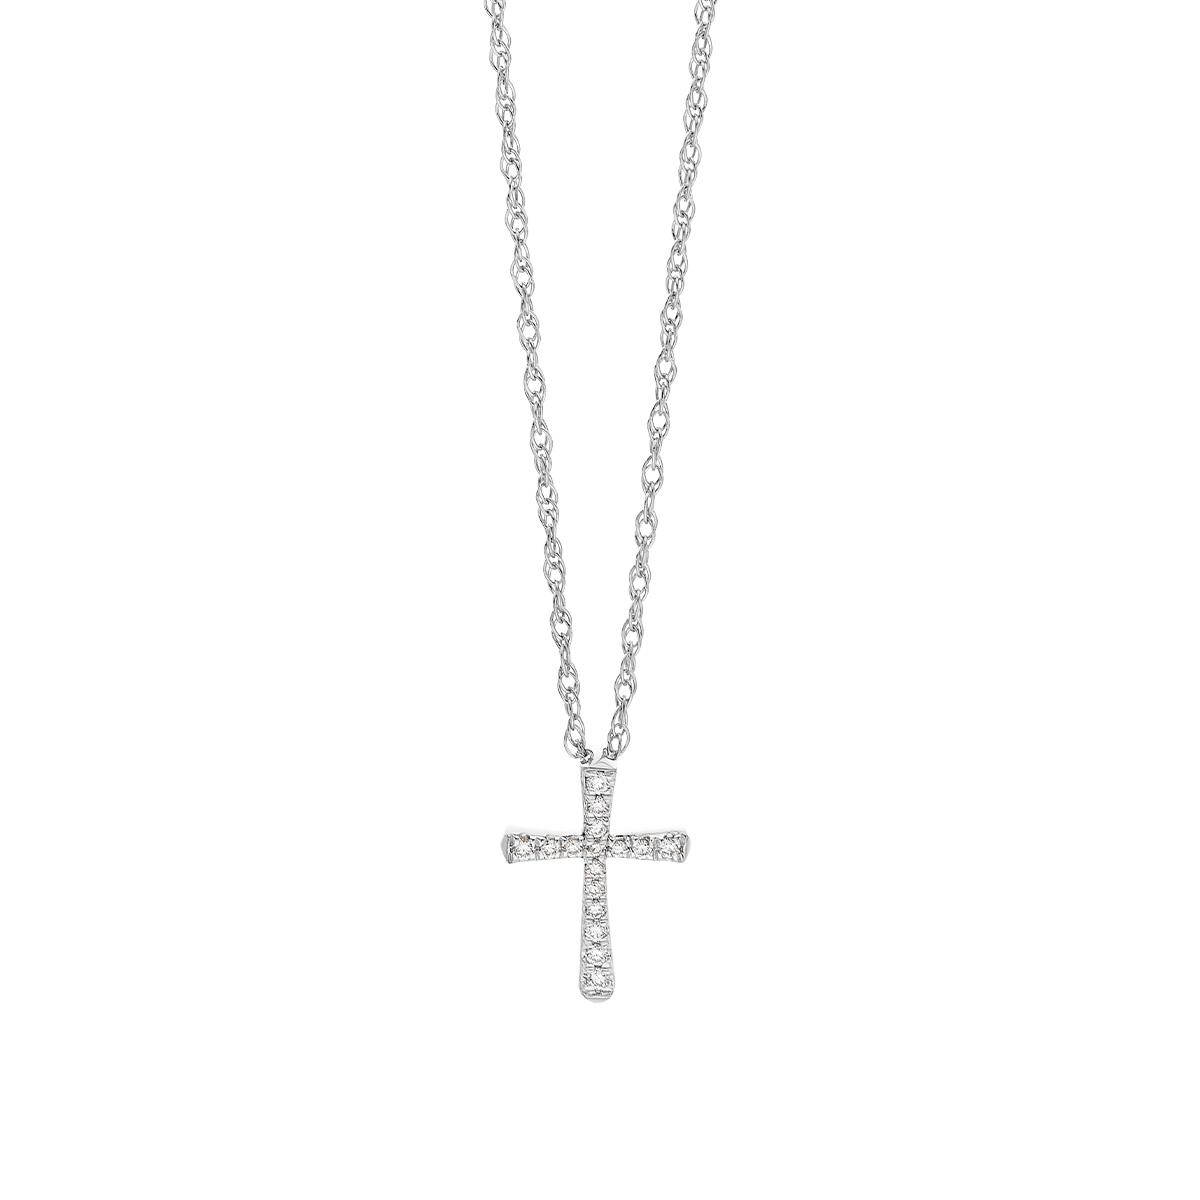 White Gold & Diamond 12mm Cross Pendant Necklace